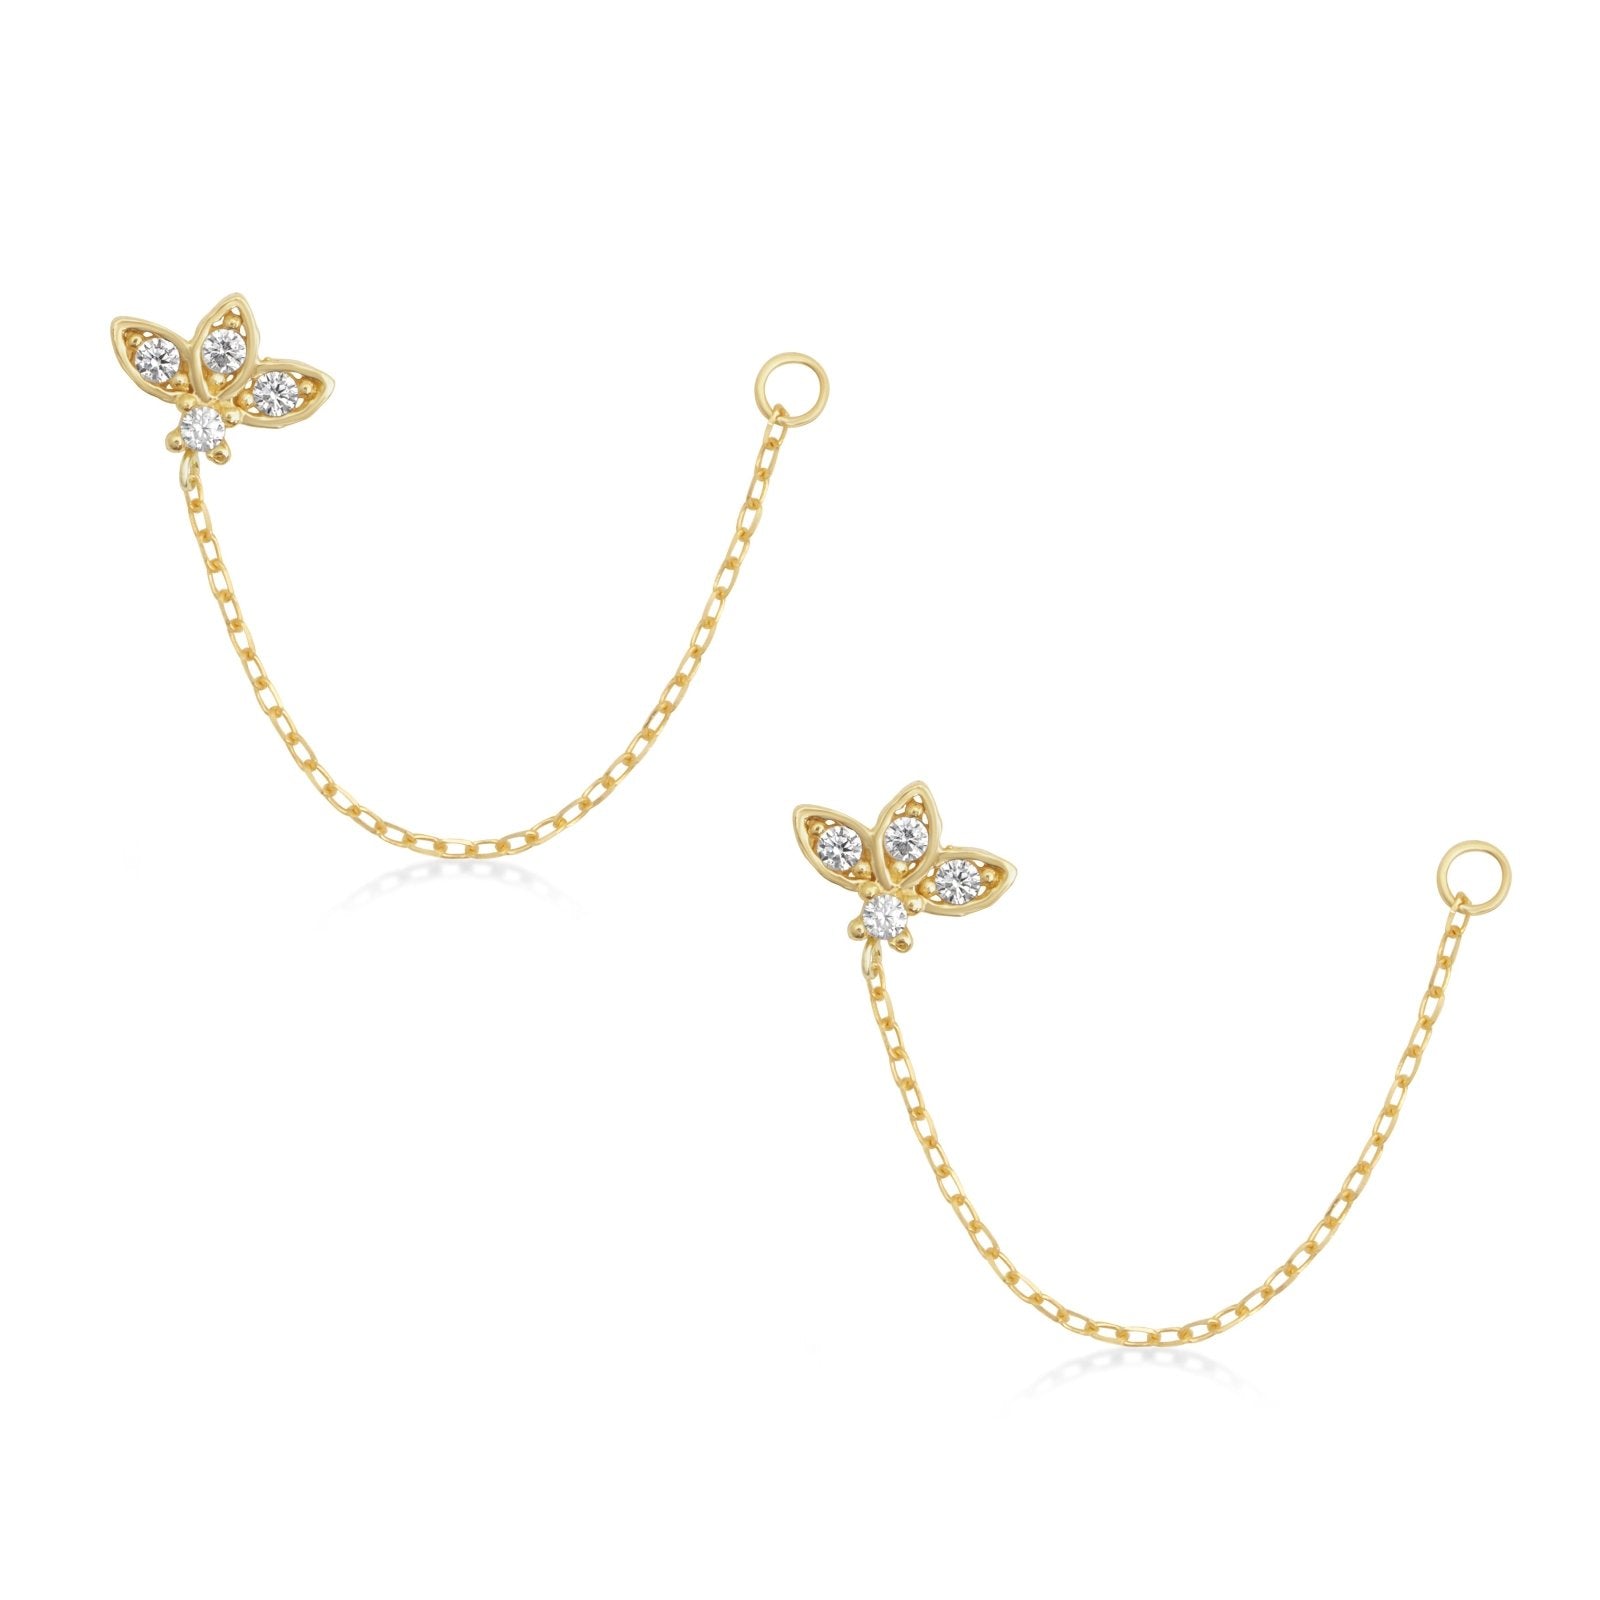 Studded Lotus Chain Earring Earrings Estella Collection #product_description# 14k Chain Earrings Dangle Earrings #tag4# #tag5# #tag6# #tag7# #tag8# #tag9# #tag10#